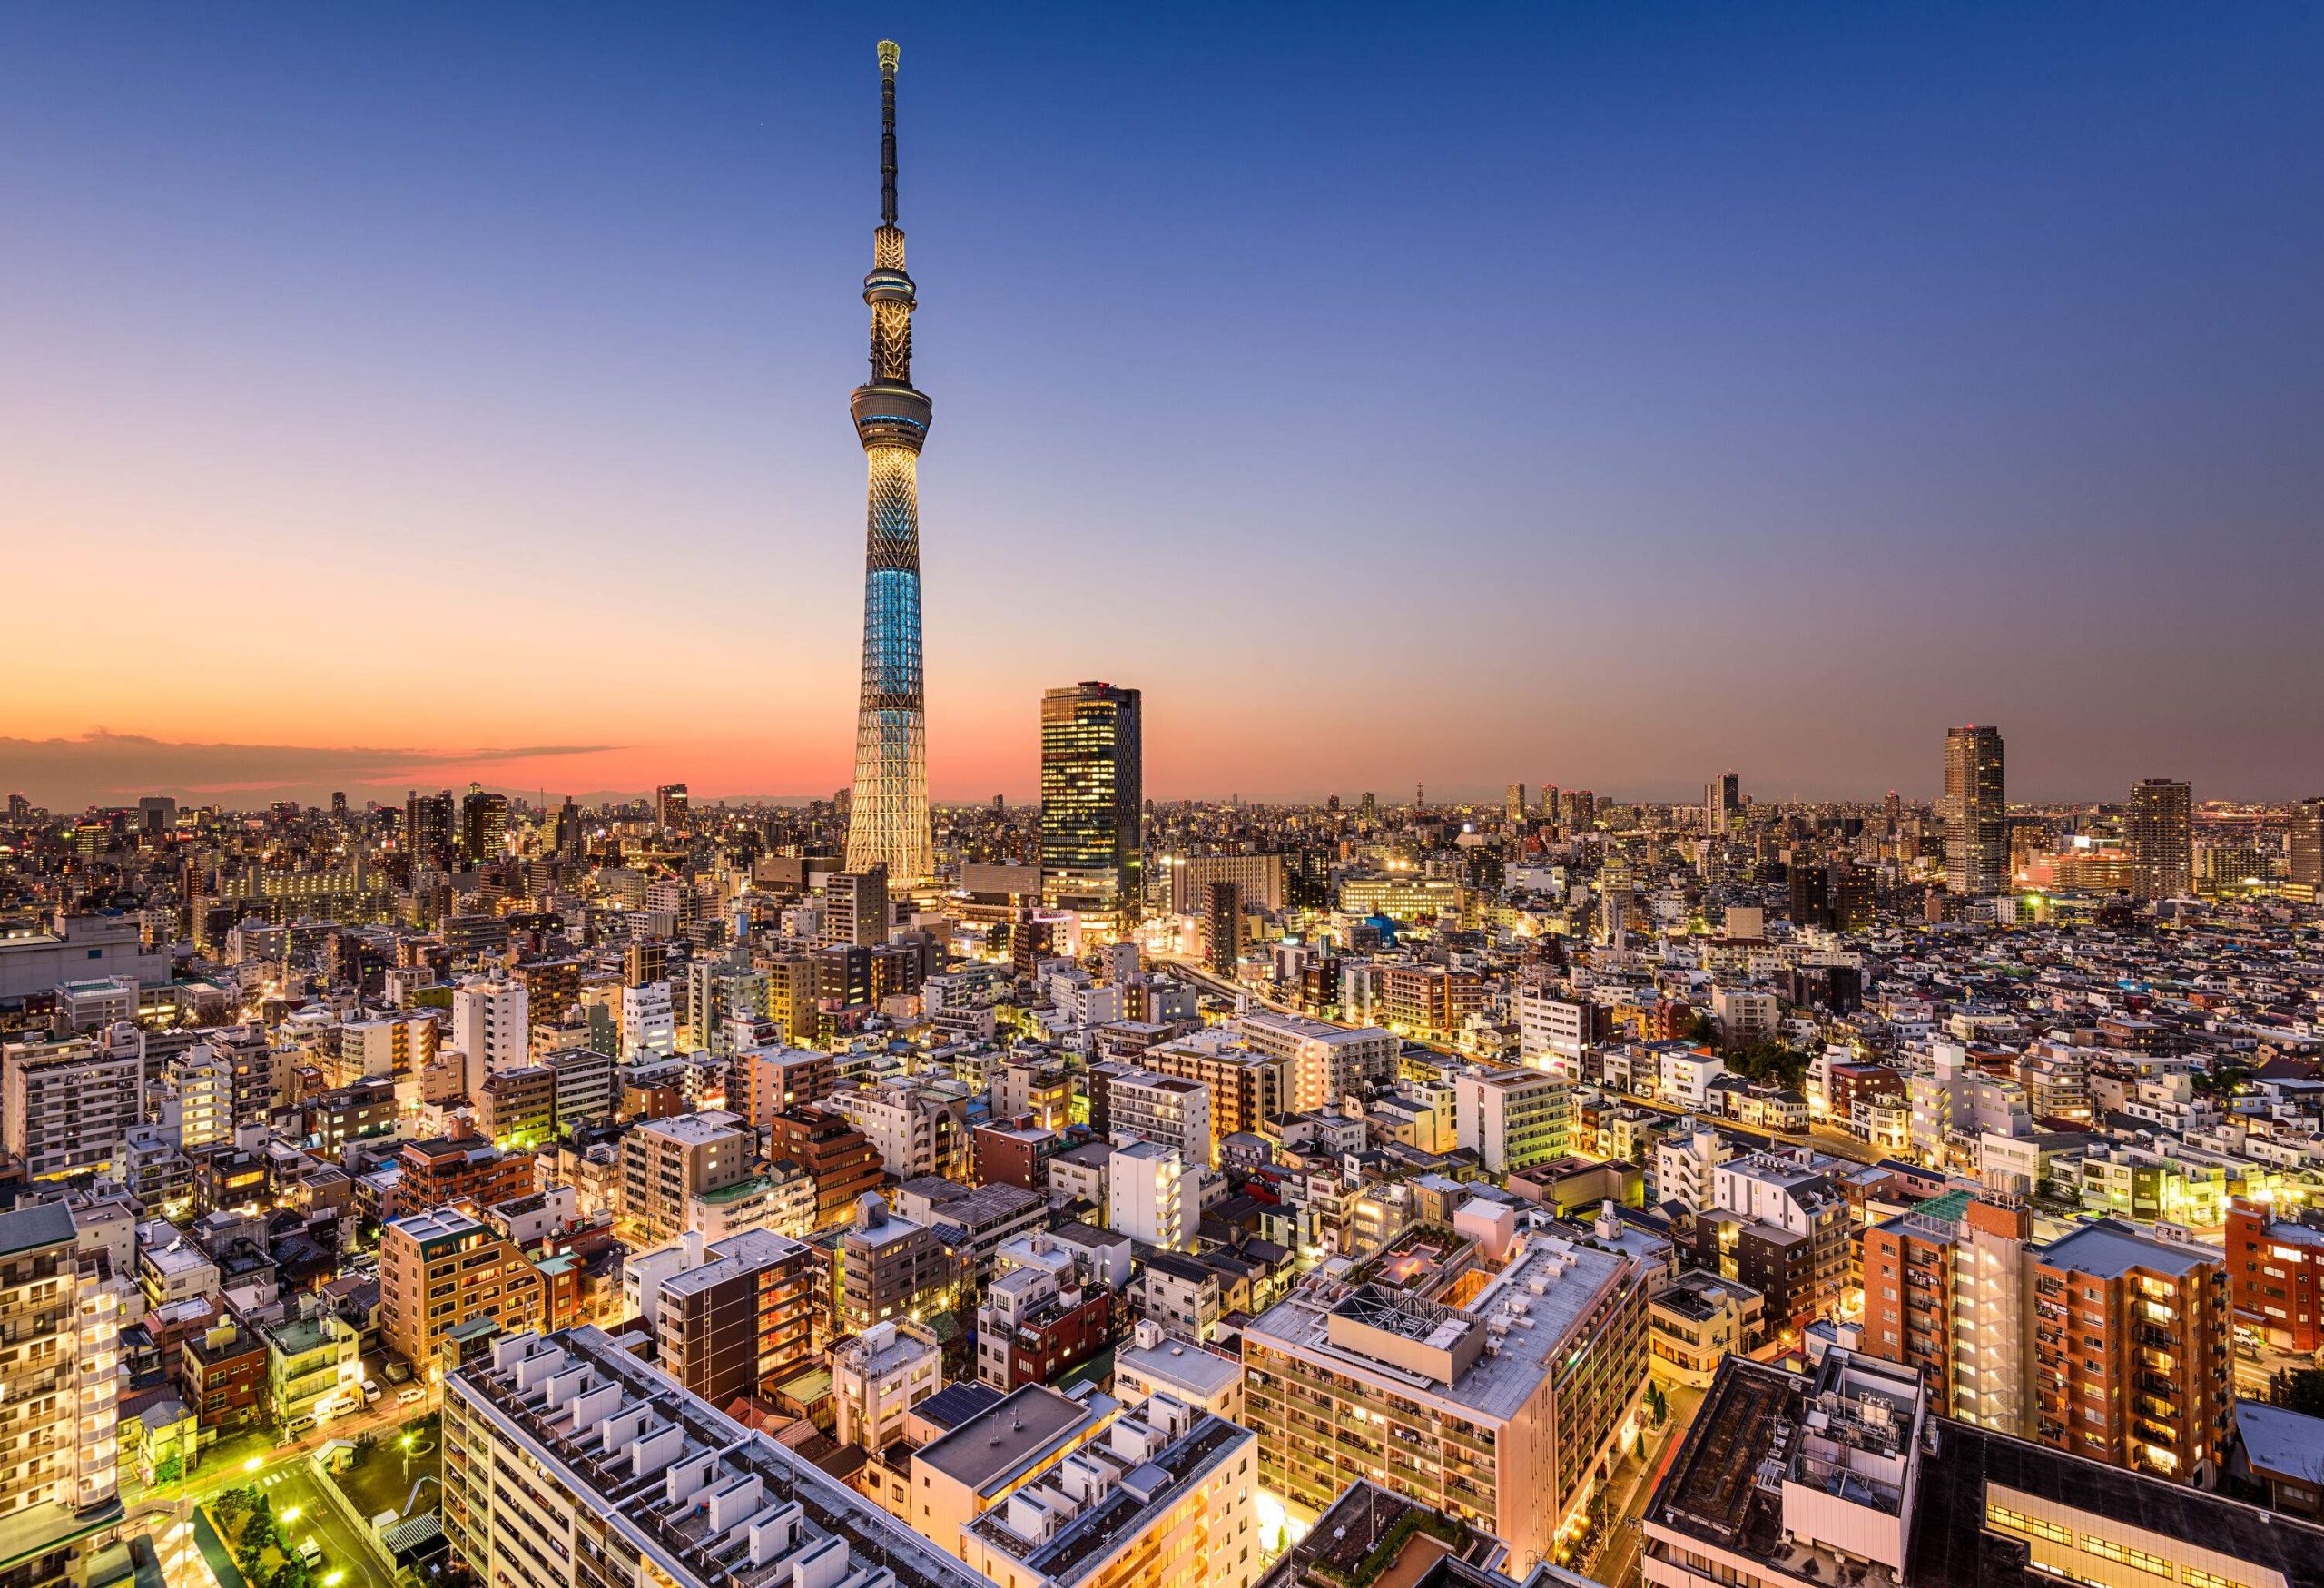 Tokyo's skyline illuminated by city lights, with the Tokyo Skytree dominating the horizon.